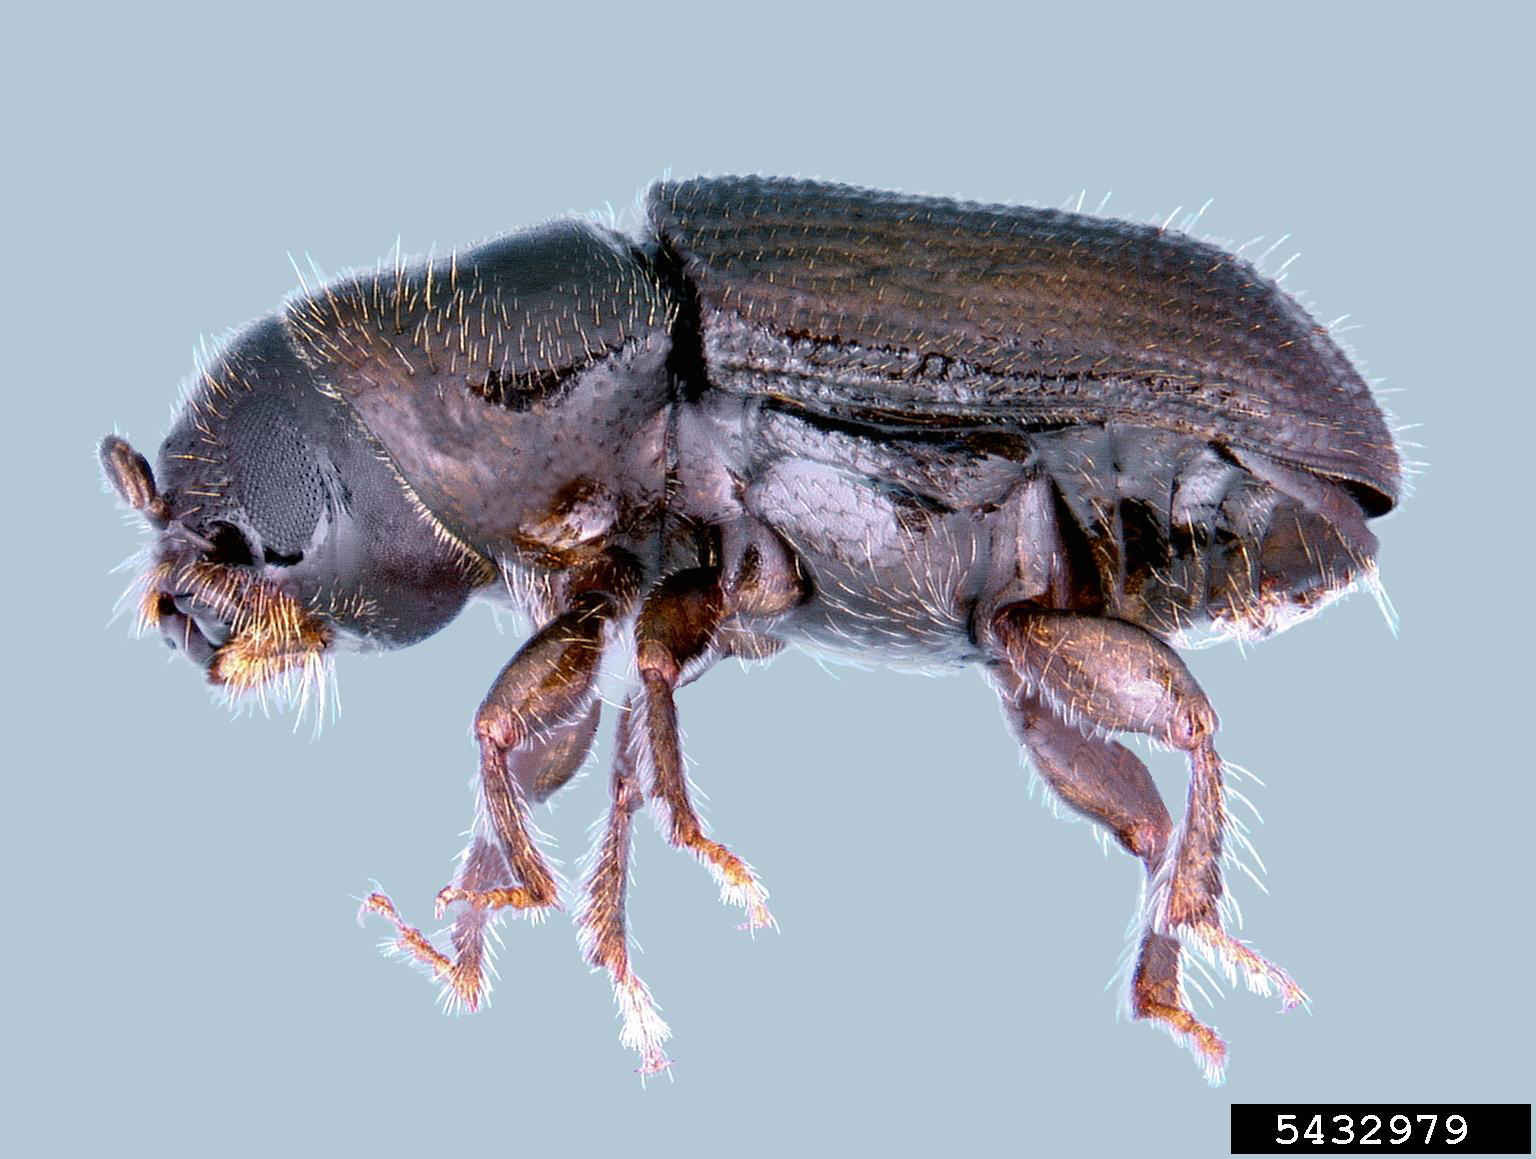 Southern Pine Beetle Adult